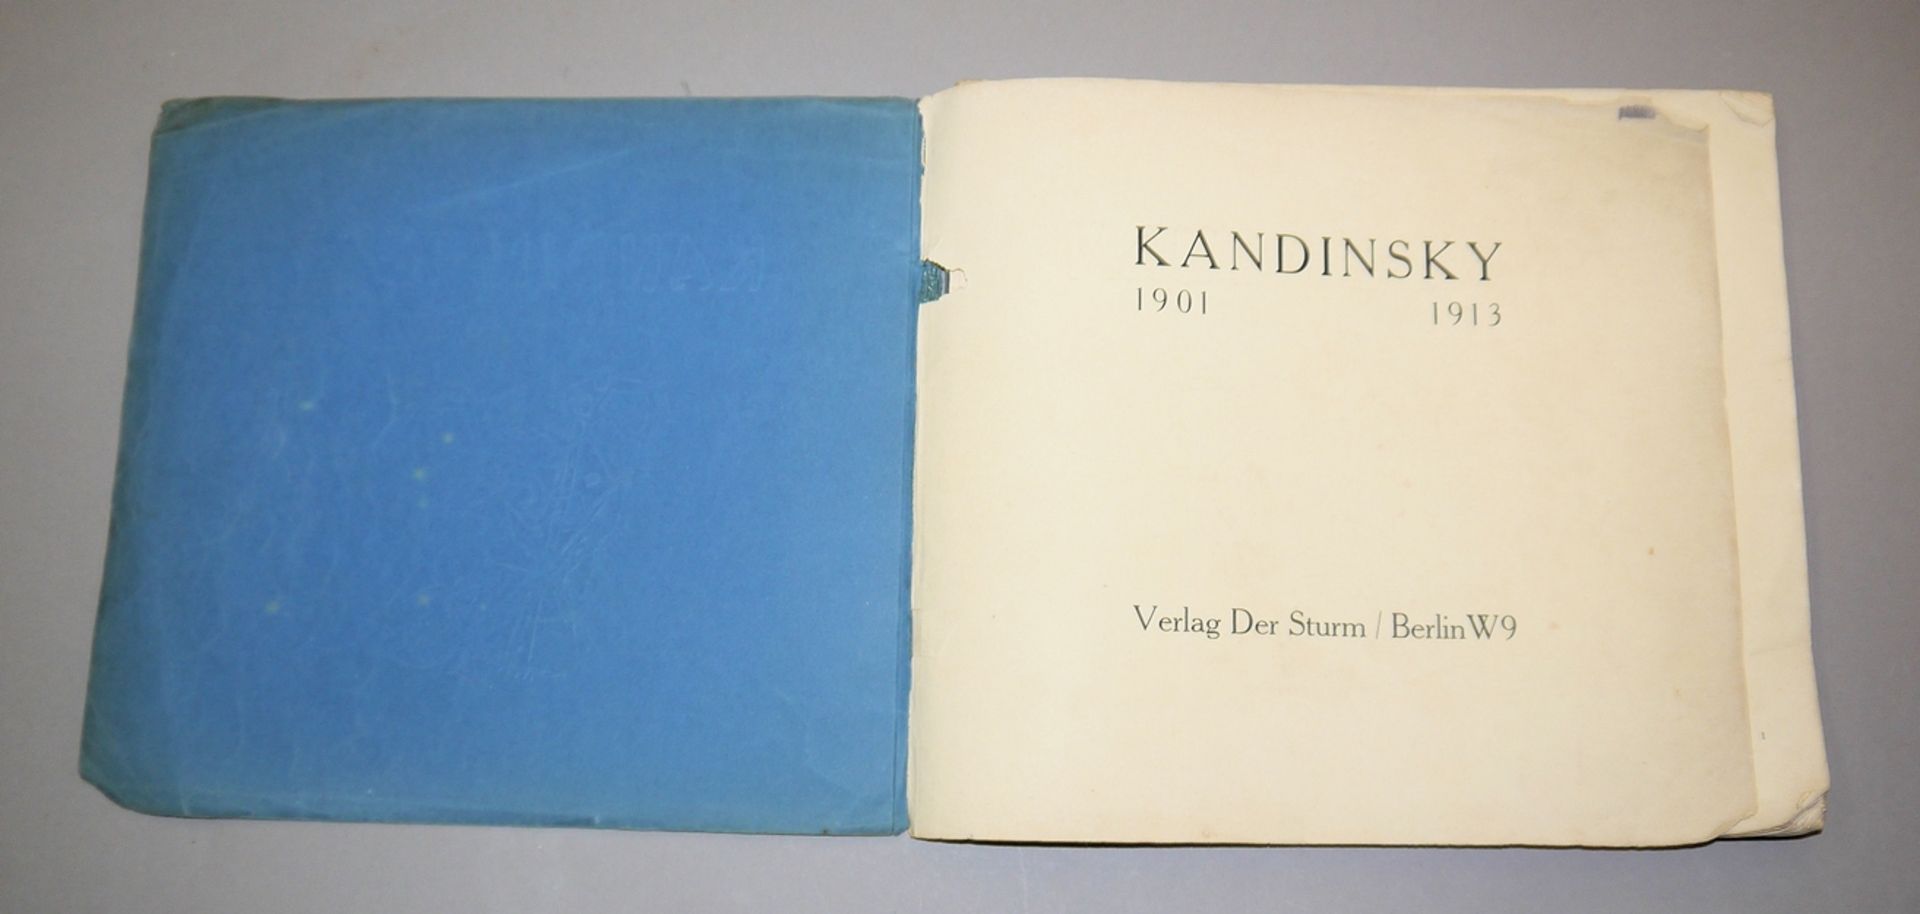 Kandinsky 1901-1913, exhibition catalogue Galerie Der Sturm, Berlin 1913 - Image 2 of 2